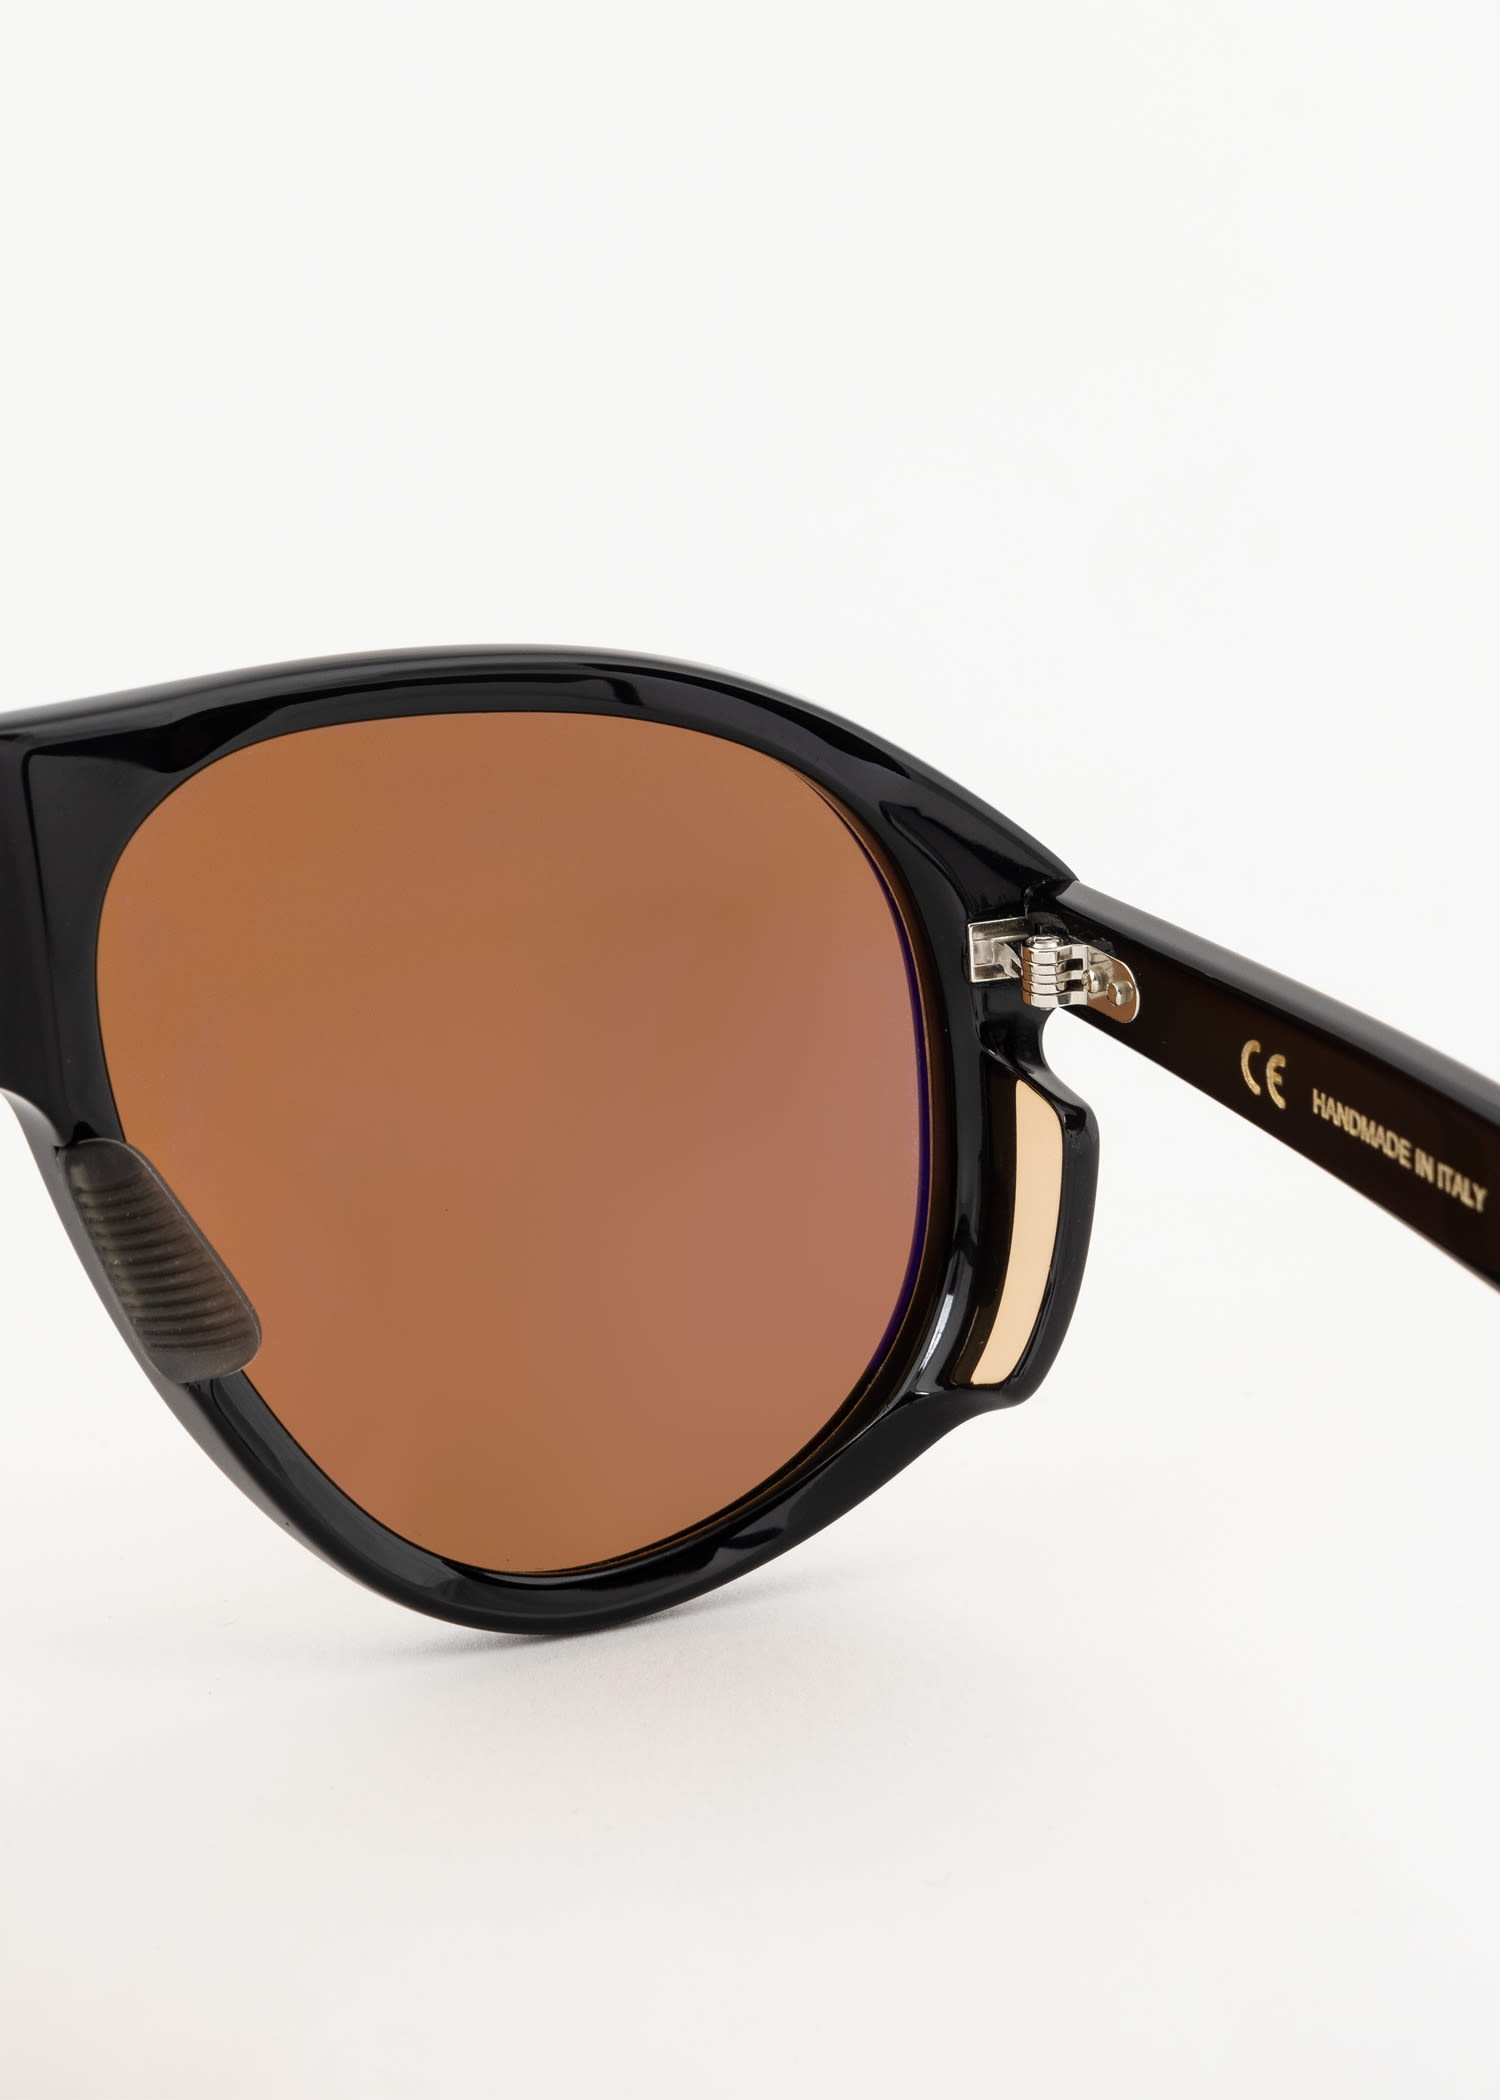 'Stelvio Noir' Sunglasses by Avventura - 4